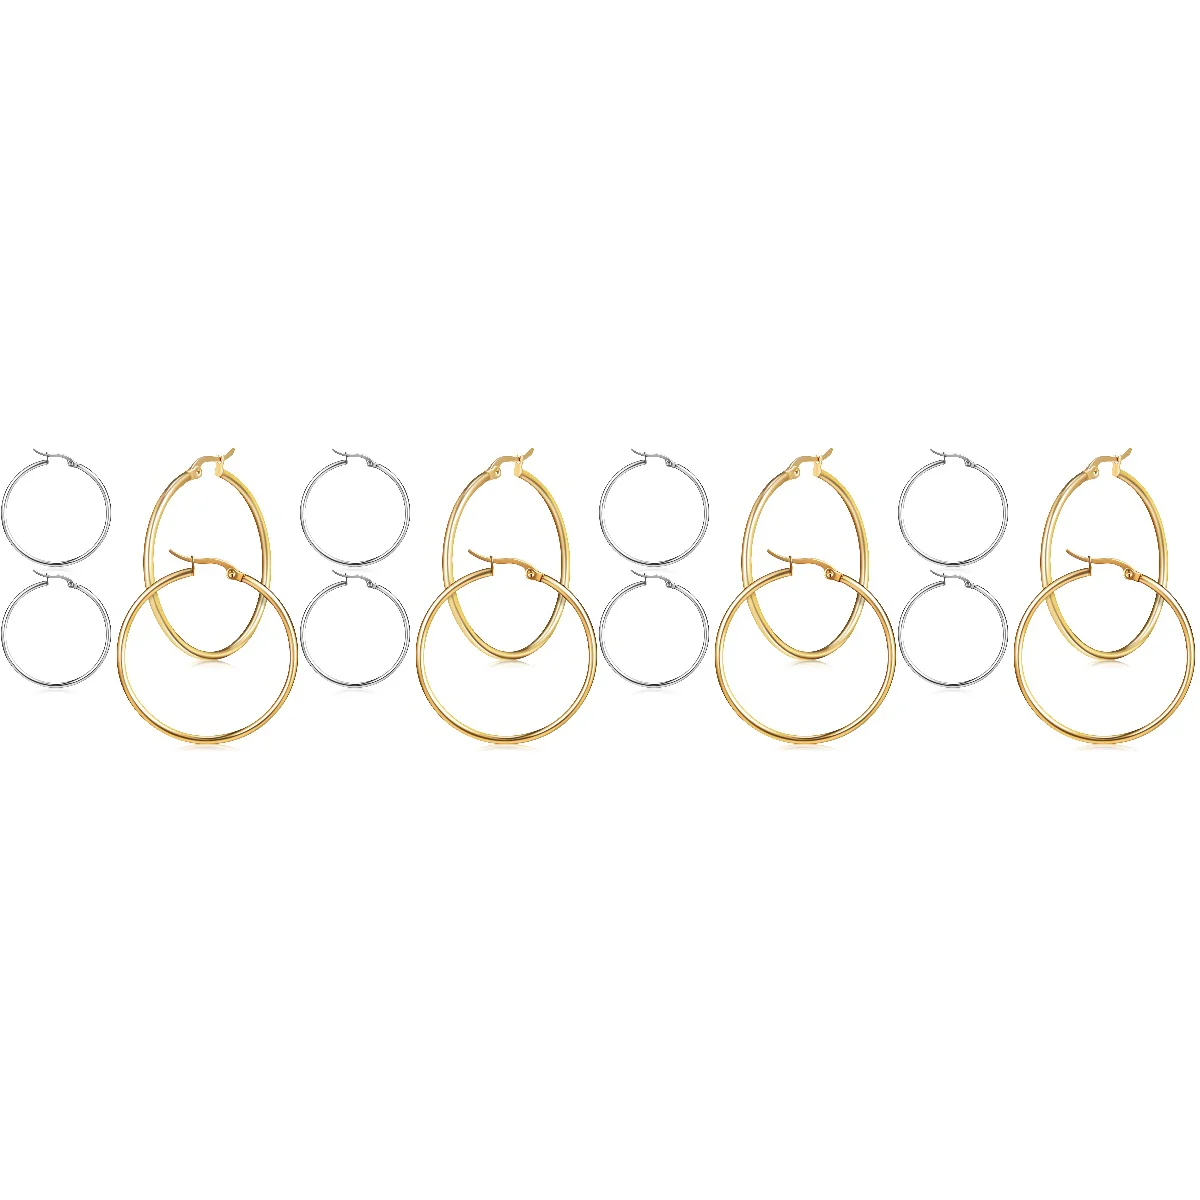 

8 Pairs of Hoop Earrings Exaggerated Circle Earrings Statement Round Earrings Jewelry